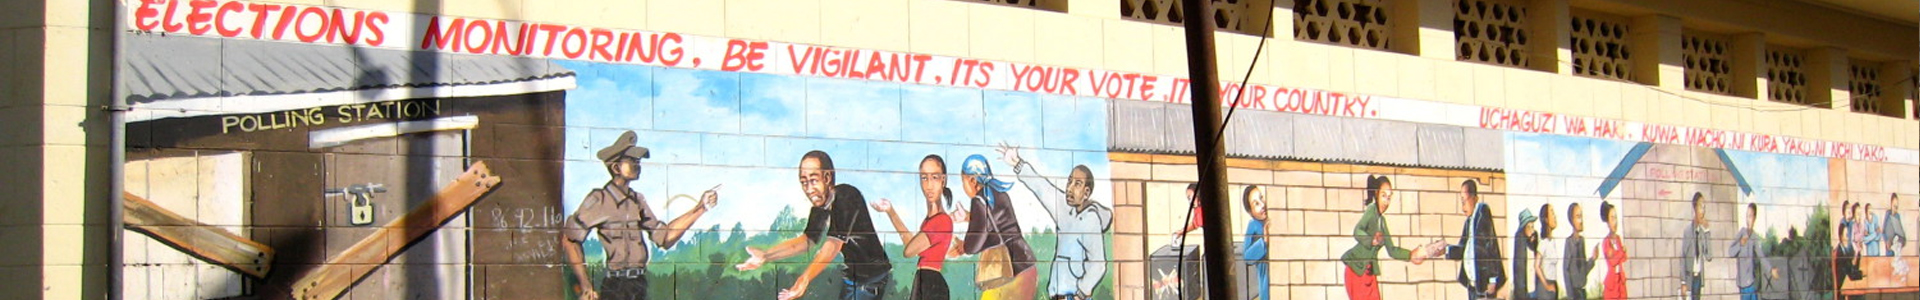 Wall art warning against election fraud